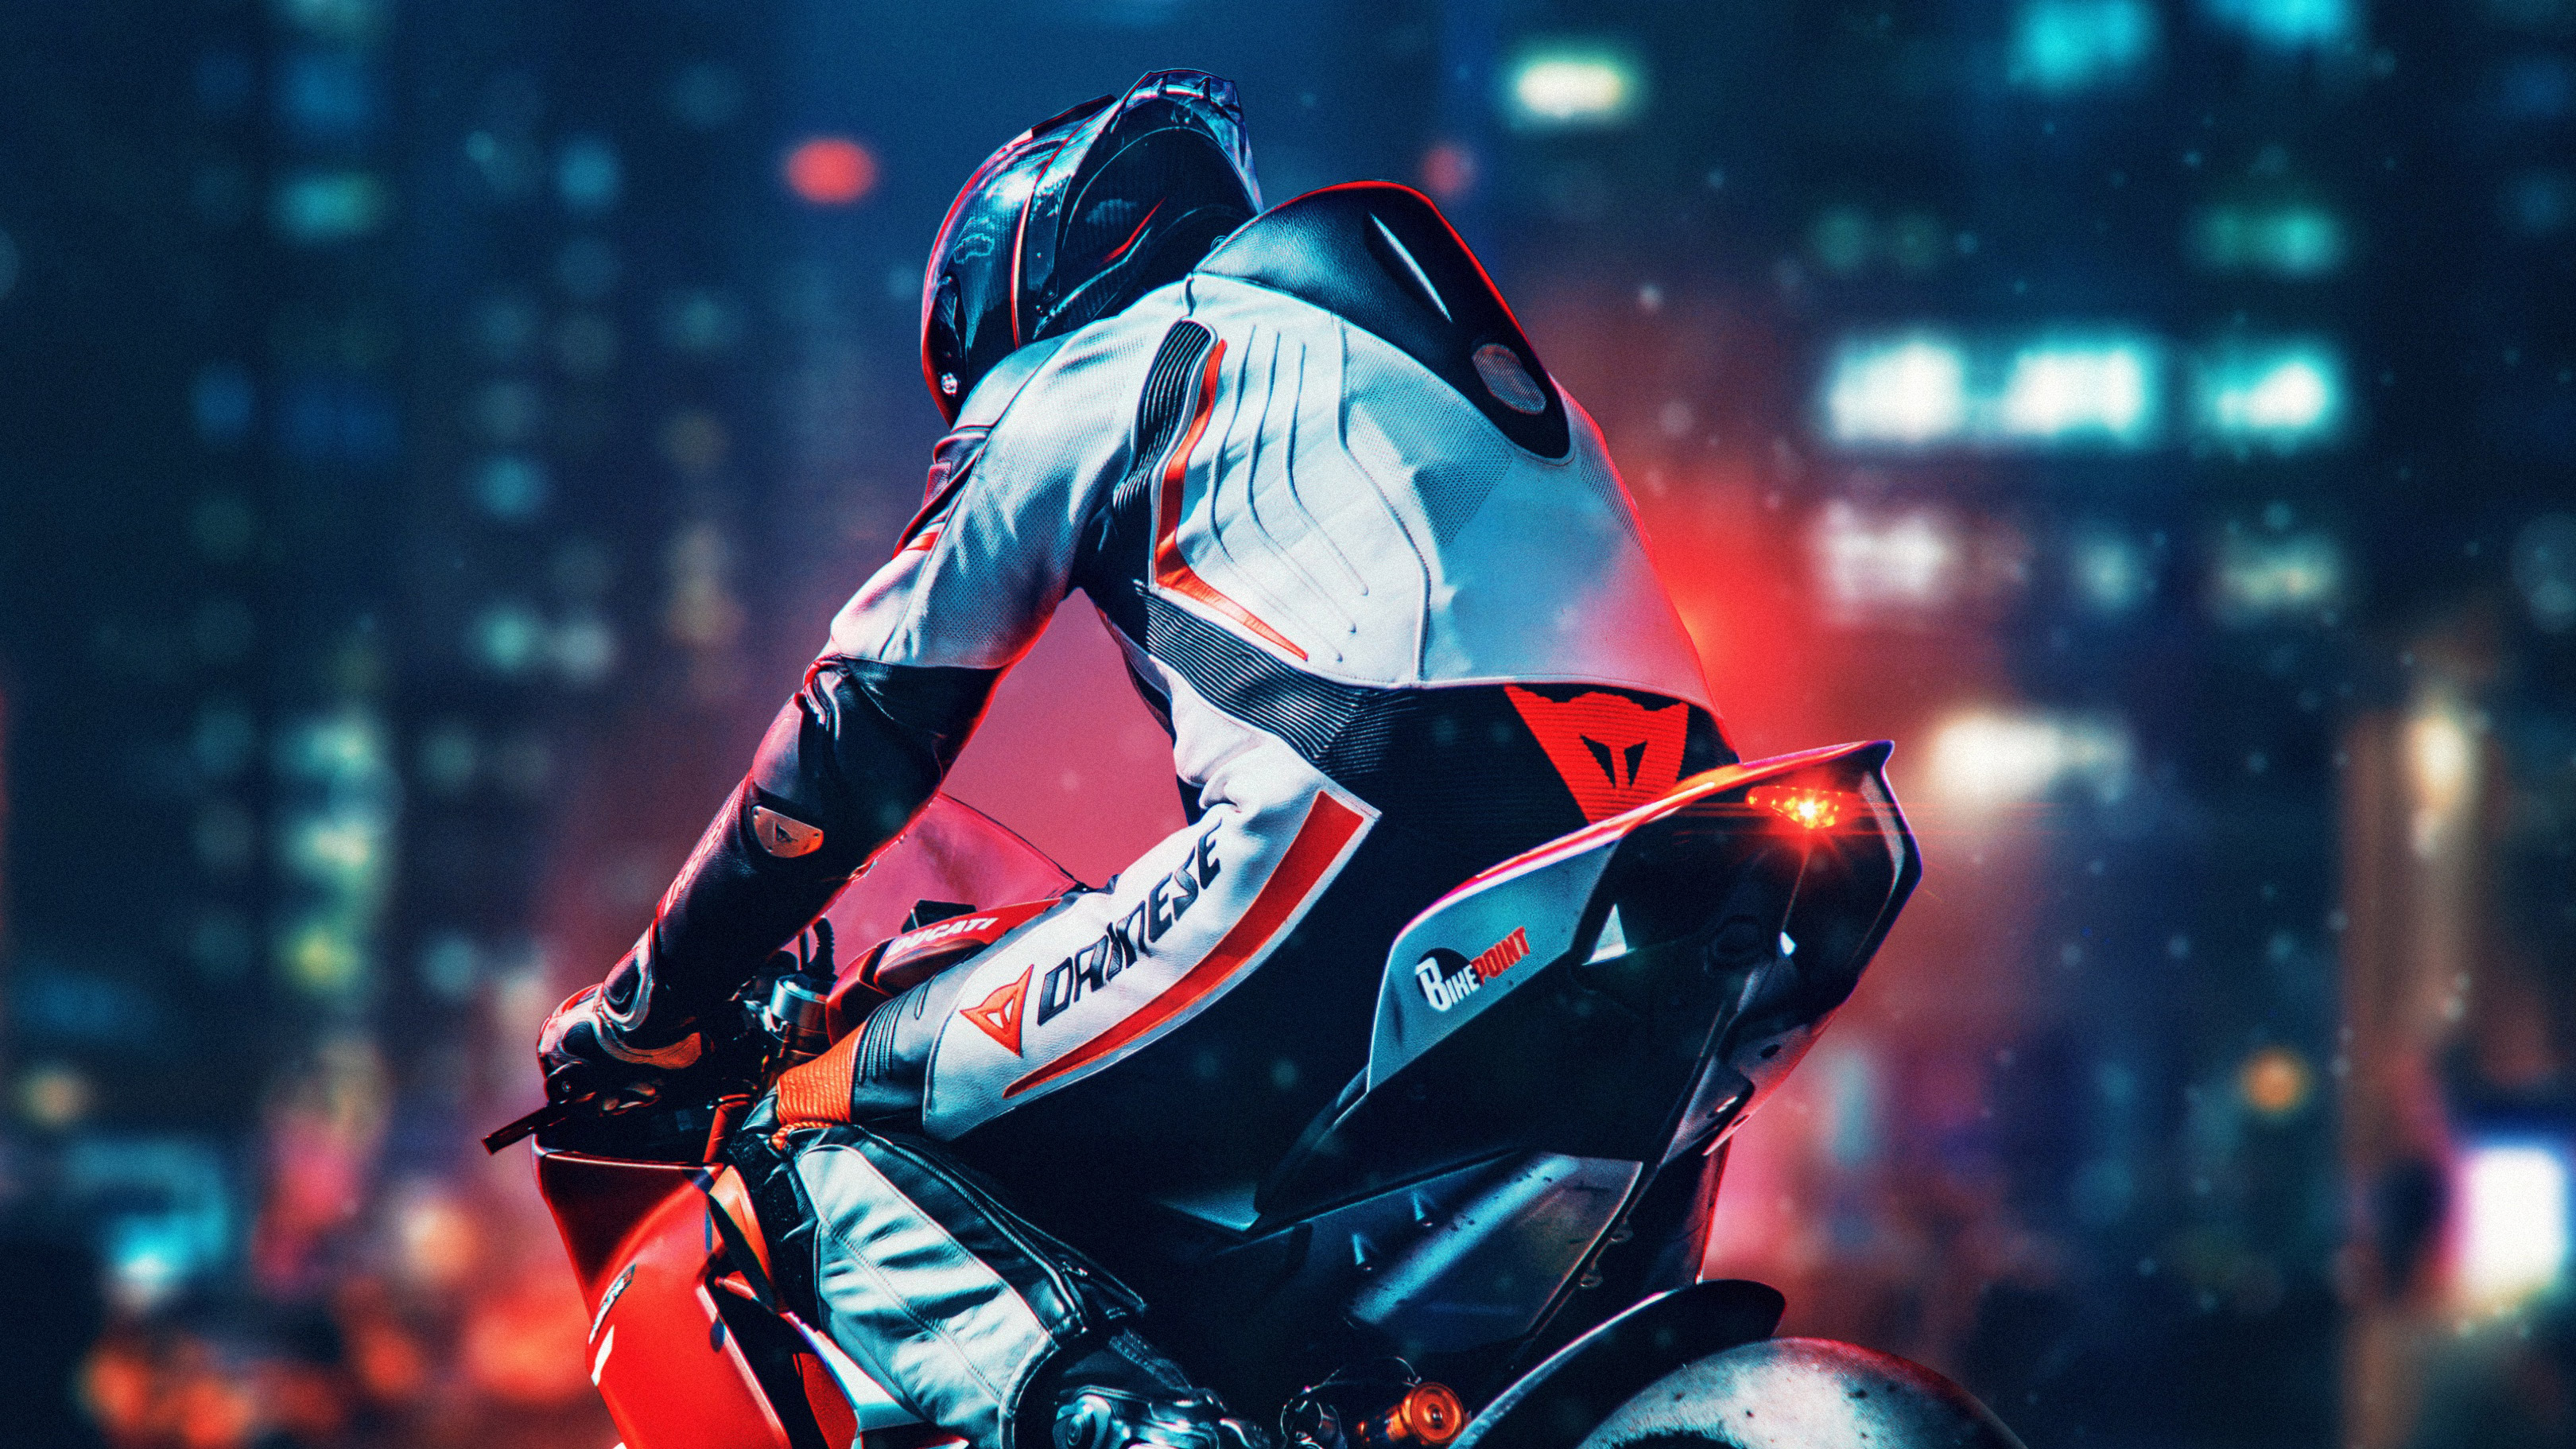 Suzuki Motorcycle Wallpapers | BadAssHelmetStore